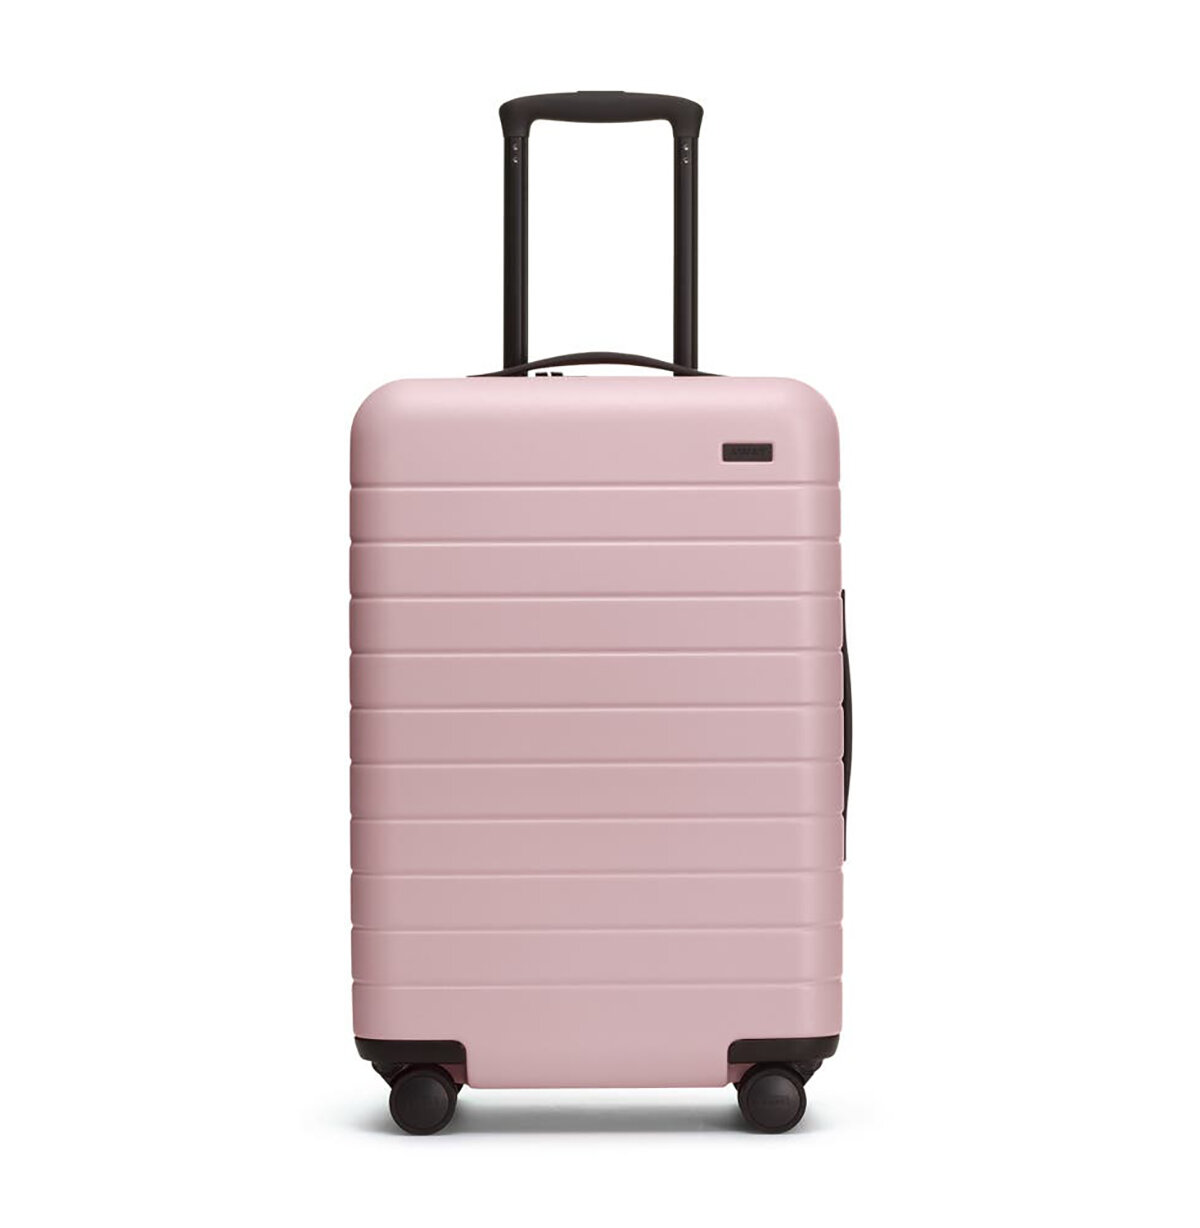 Our favorite travel hack? Luggage sleeves. #deisngedtodomore